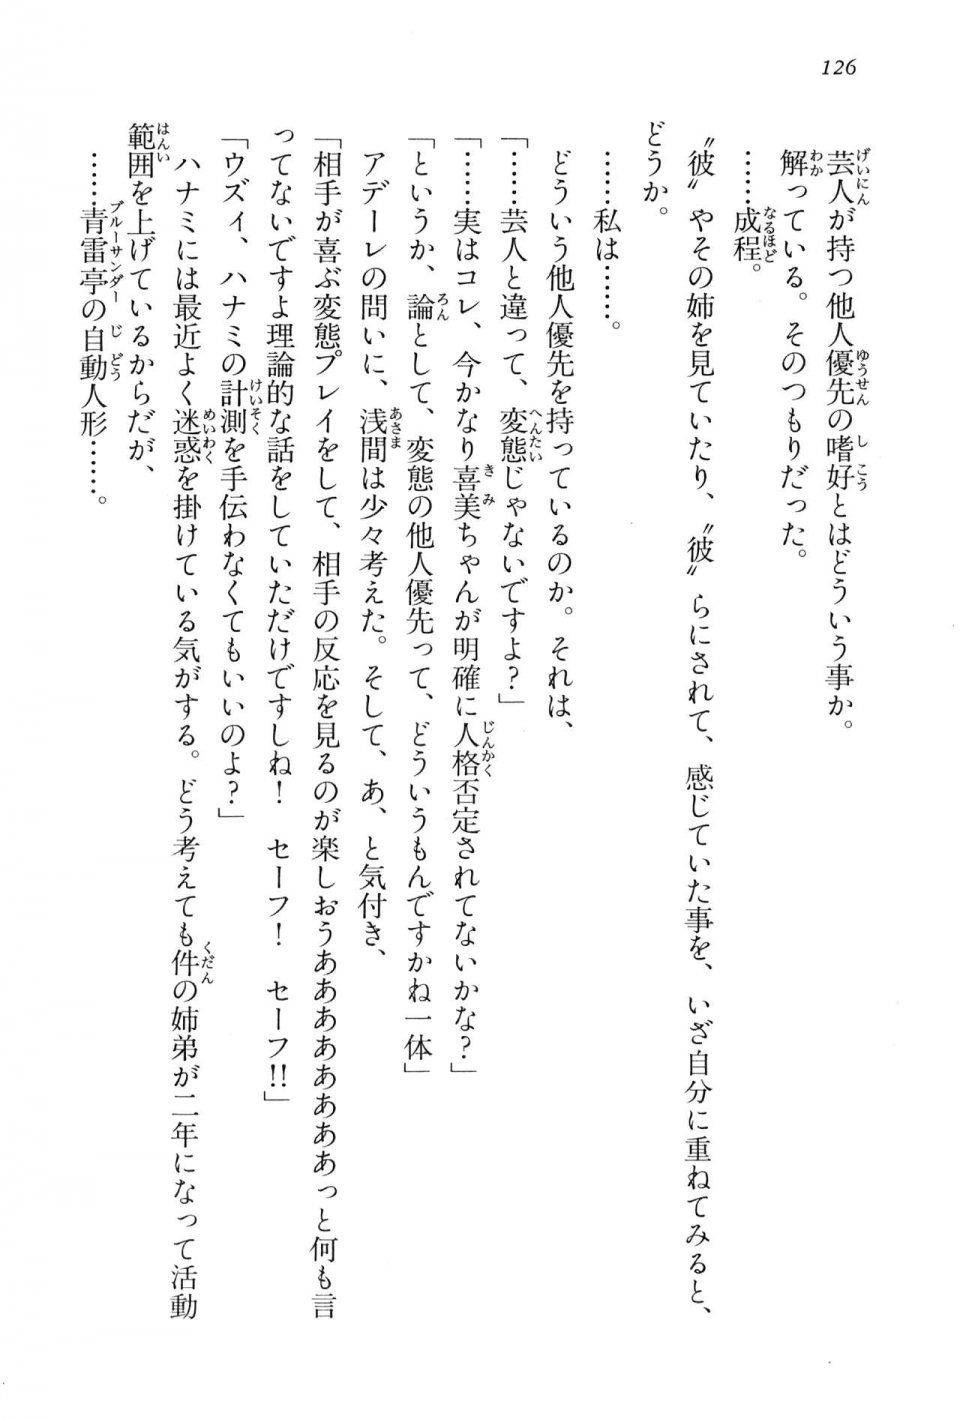 Kyoukai Senjou no Horizon BD Special Mininovel Vol 4(2B) - Photo #130